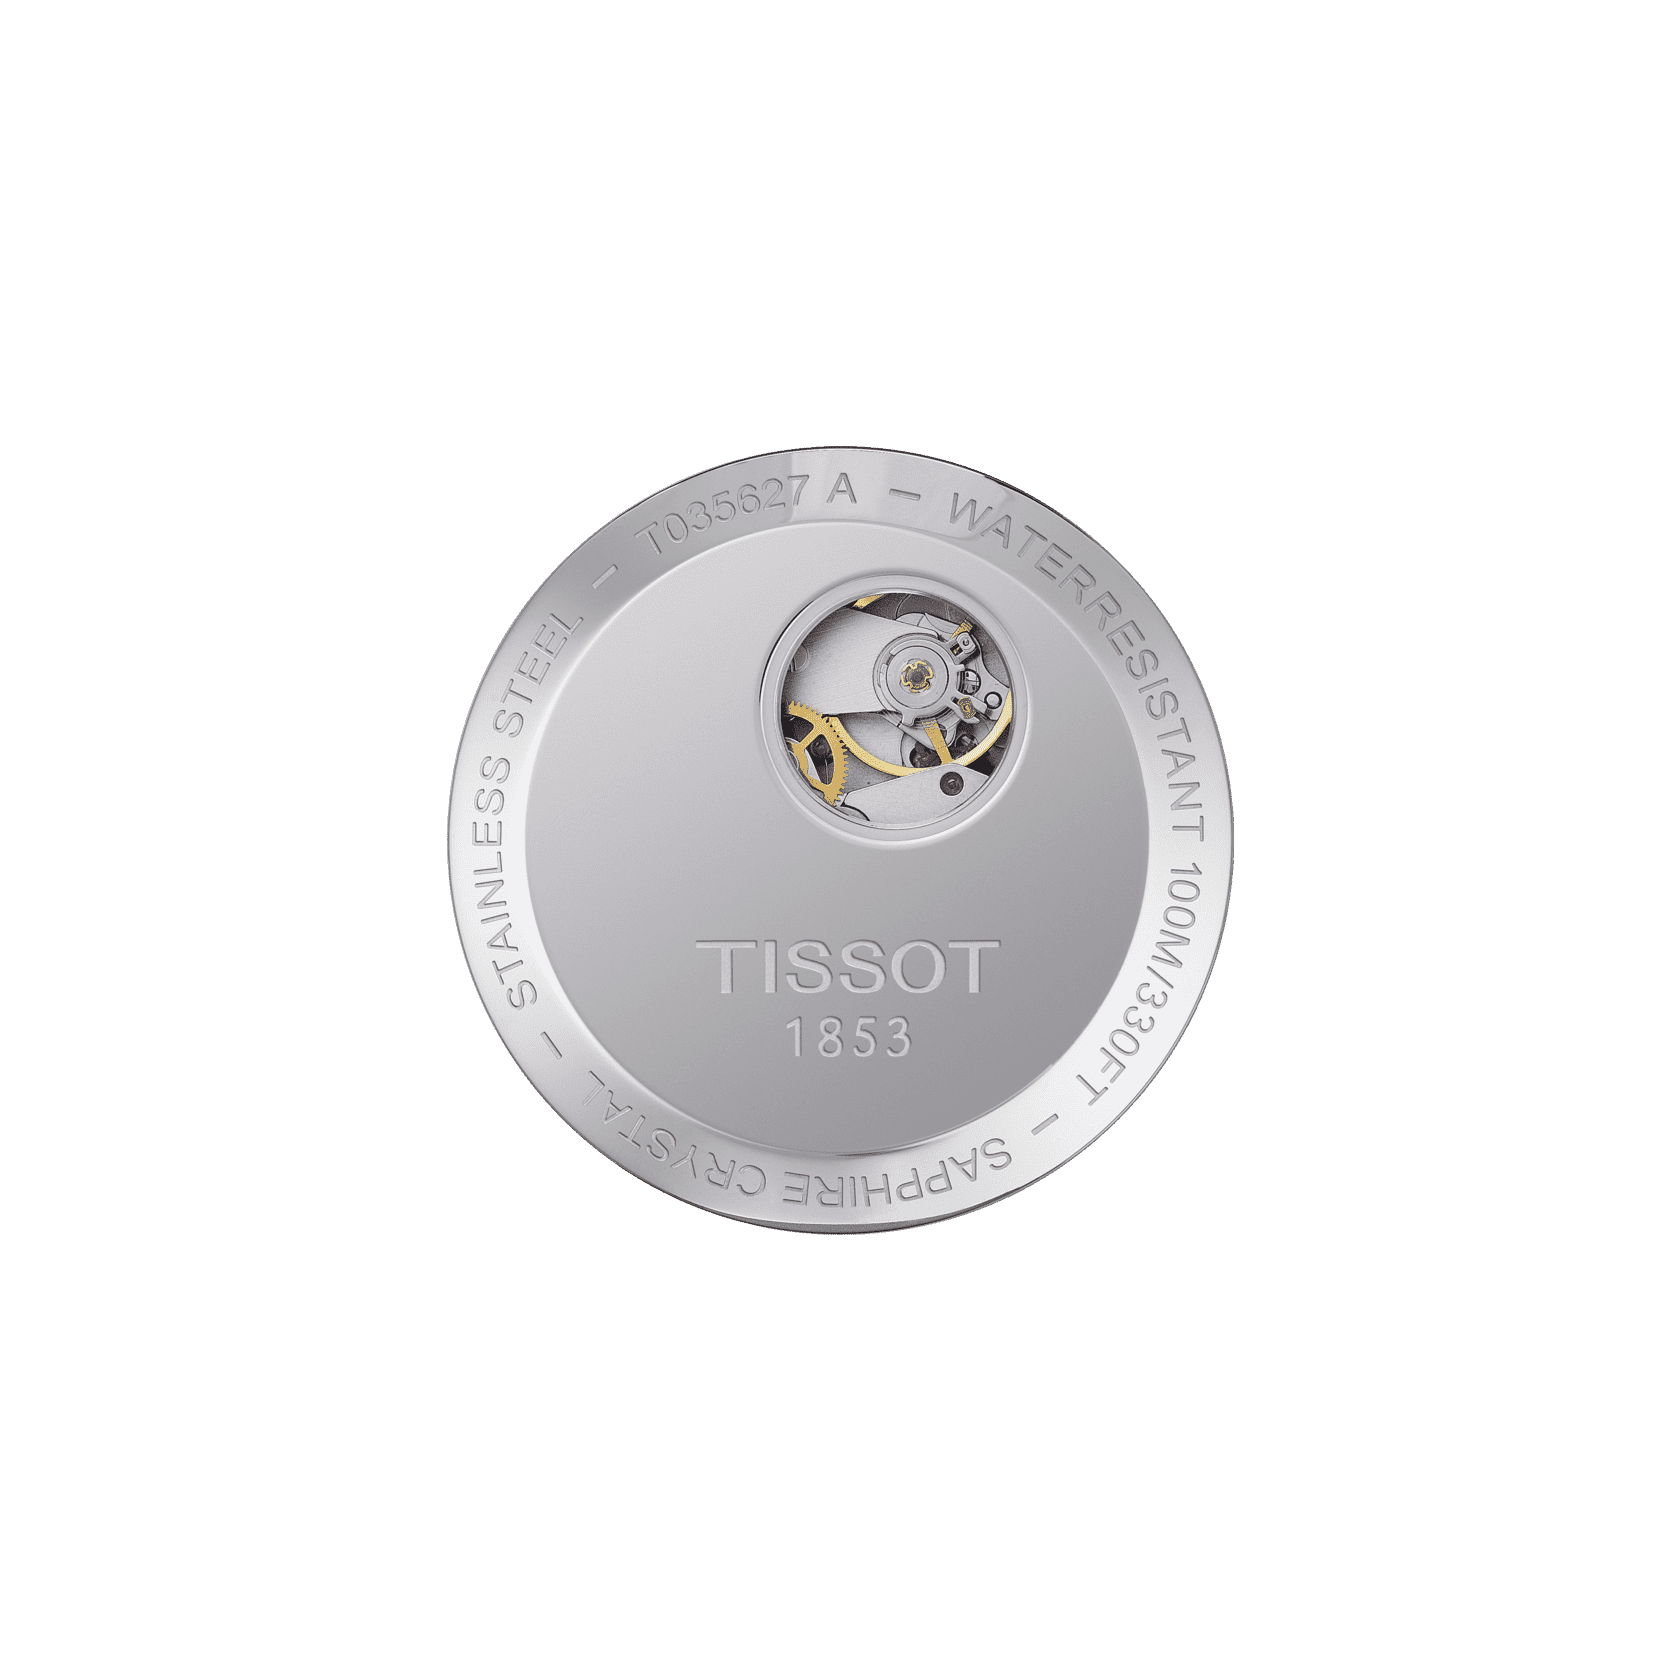 Best Swiss Replica Rolex Watches